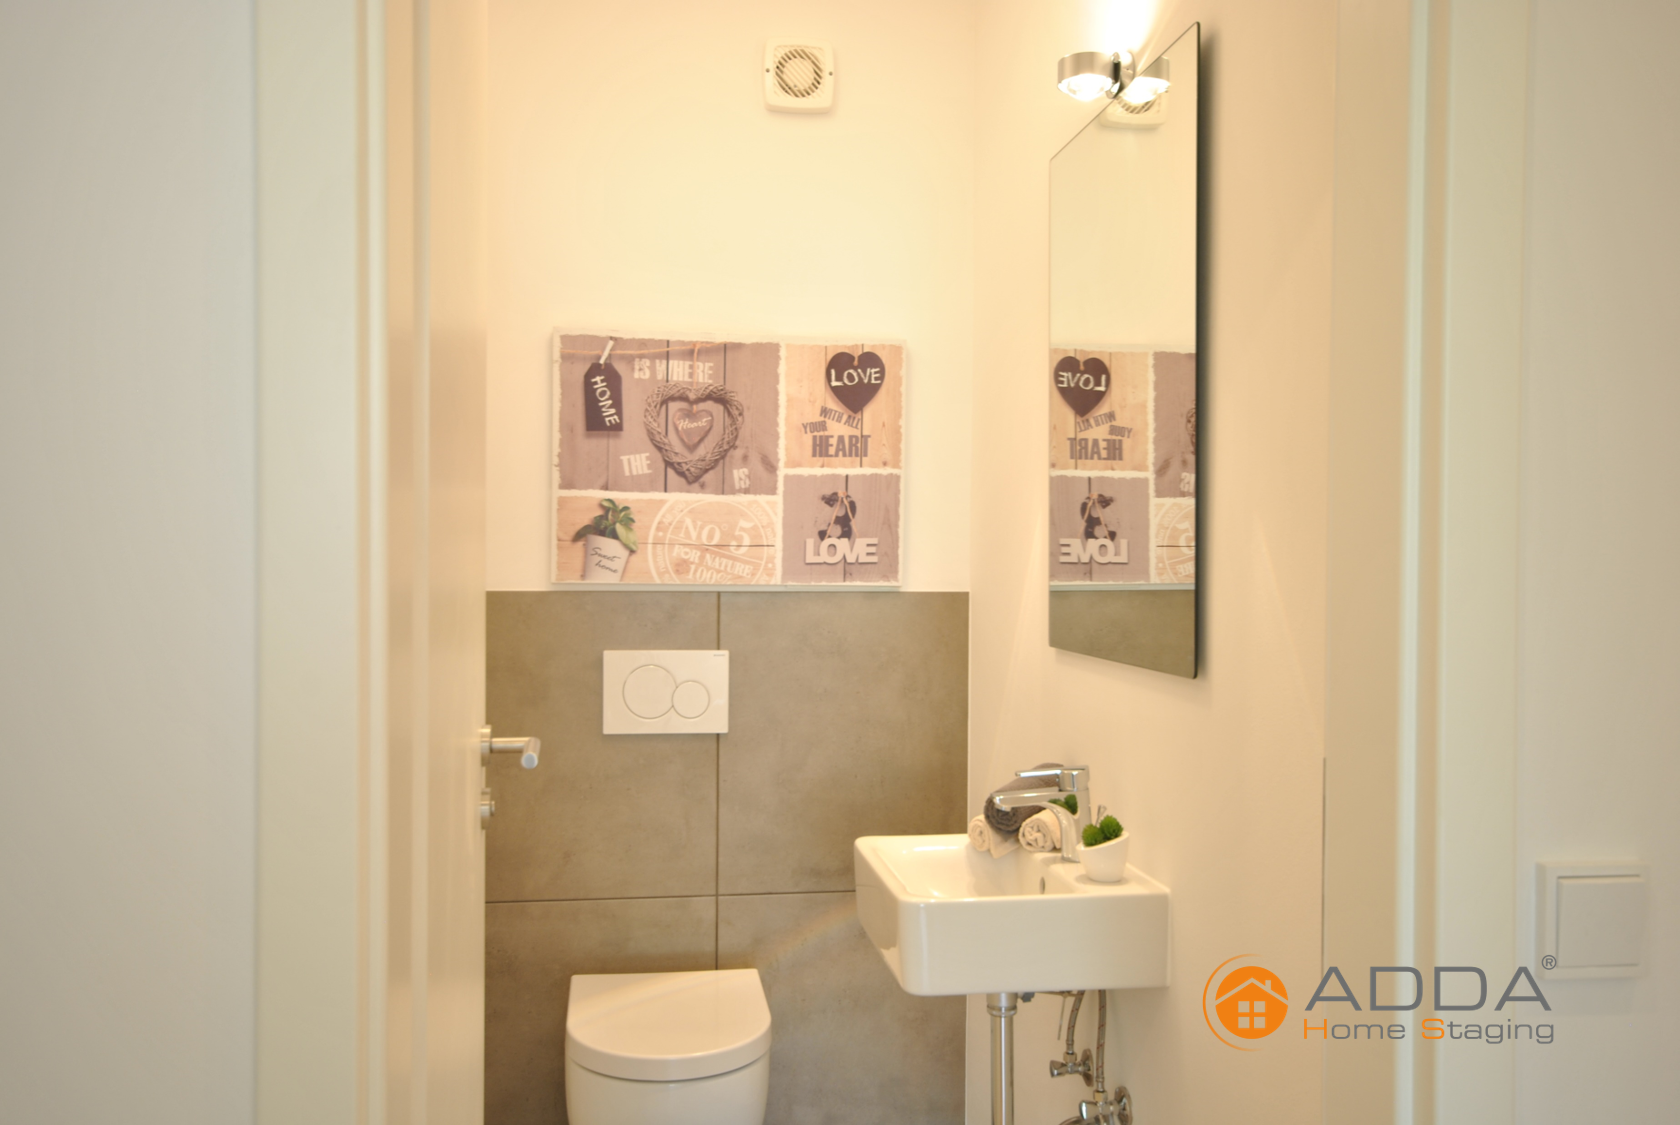 Toilette nach ADDA Homestaging #toilette #raumgestaltung ©ADDA Homestaging